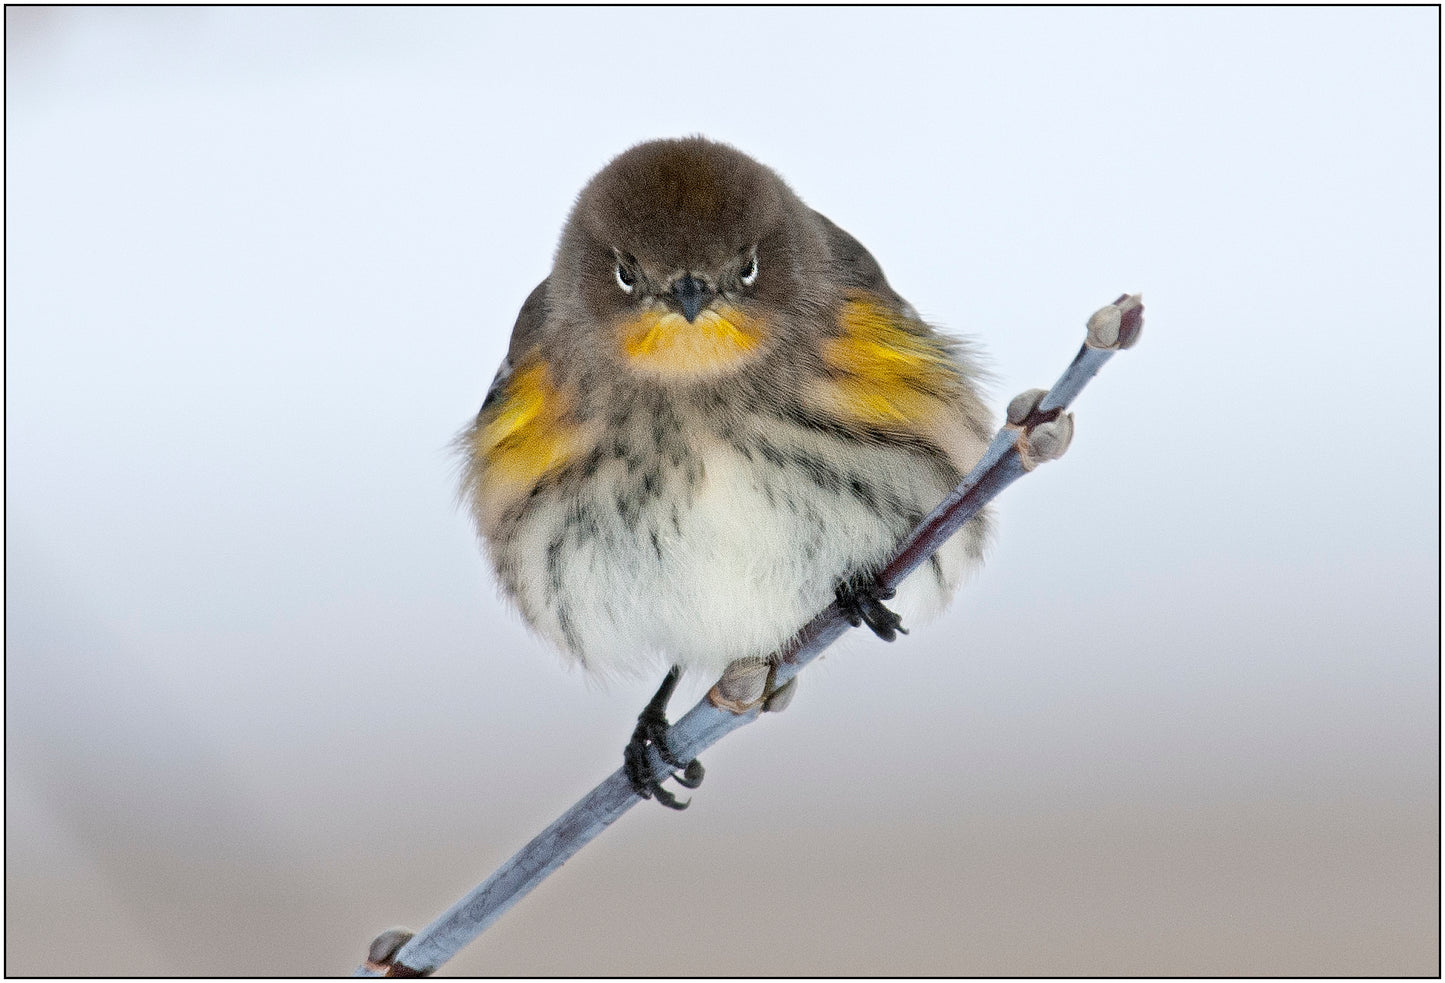 Grumpy looking bird sitting on a twig